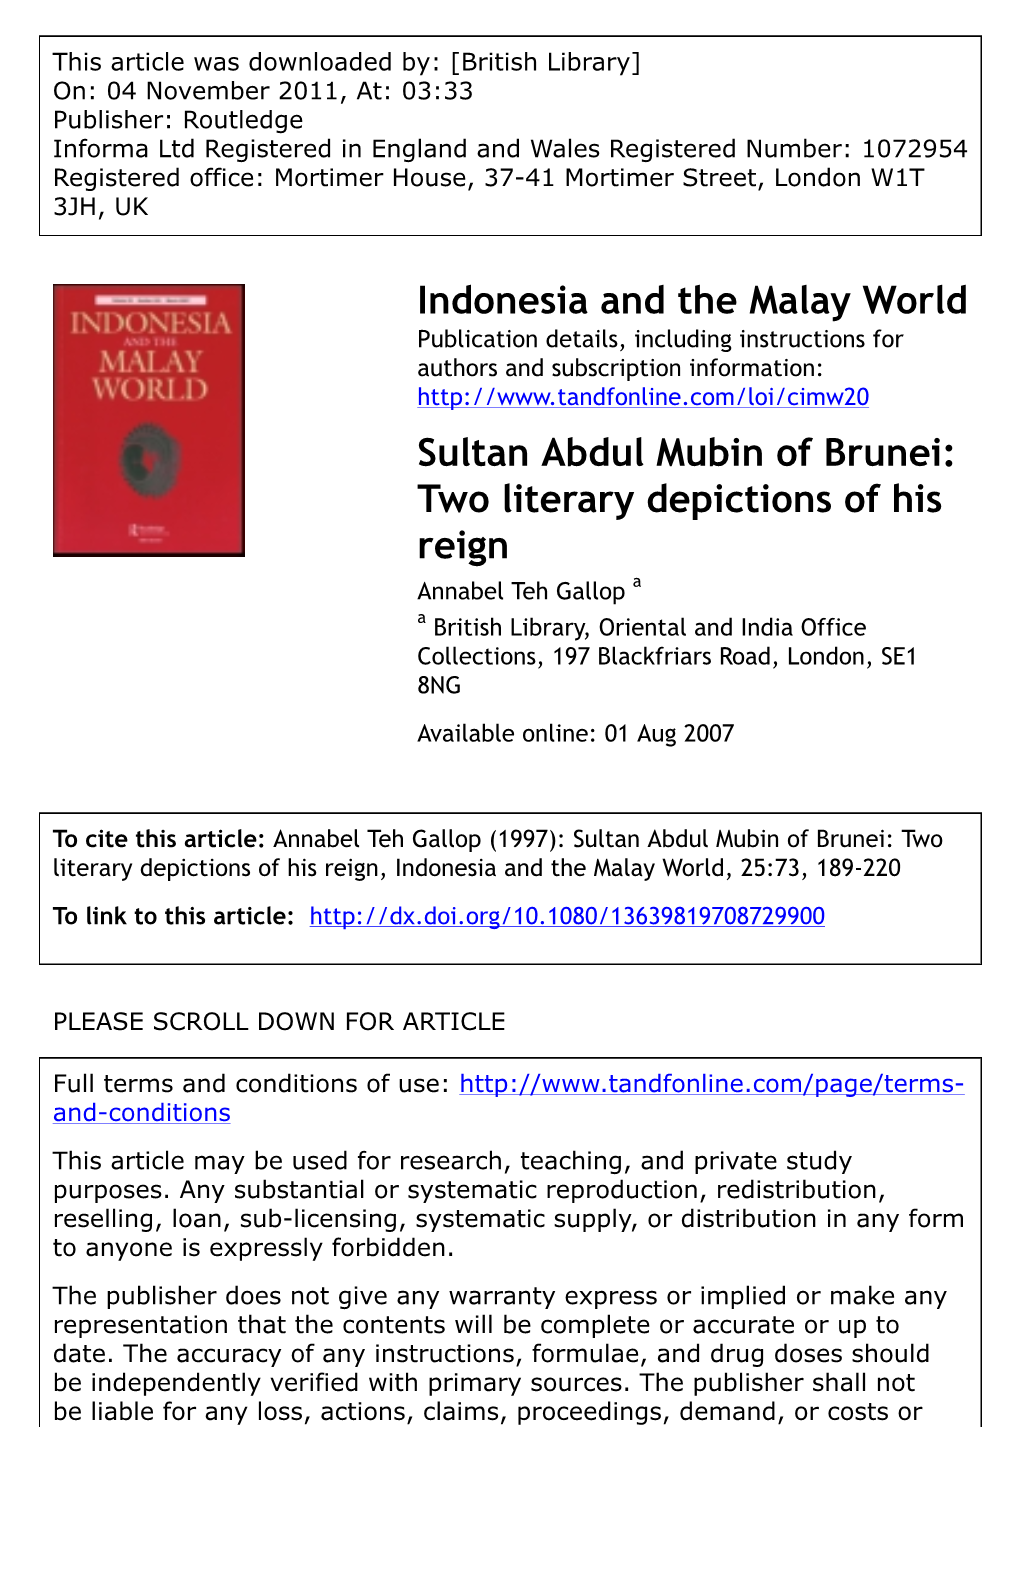 Sultan Abdul Mubin of Brunei